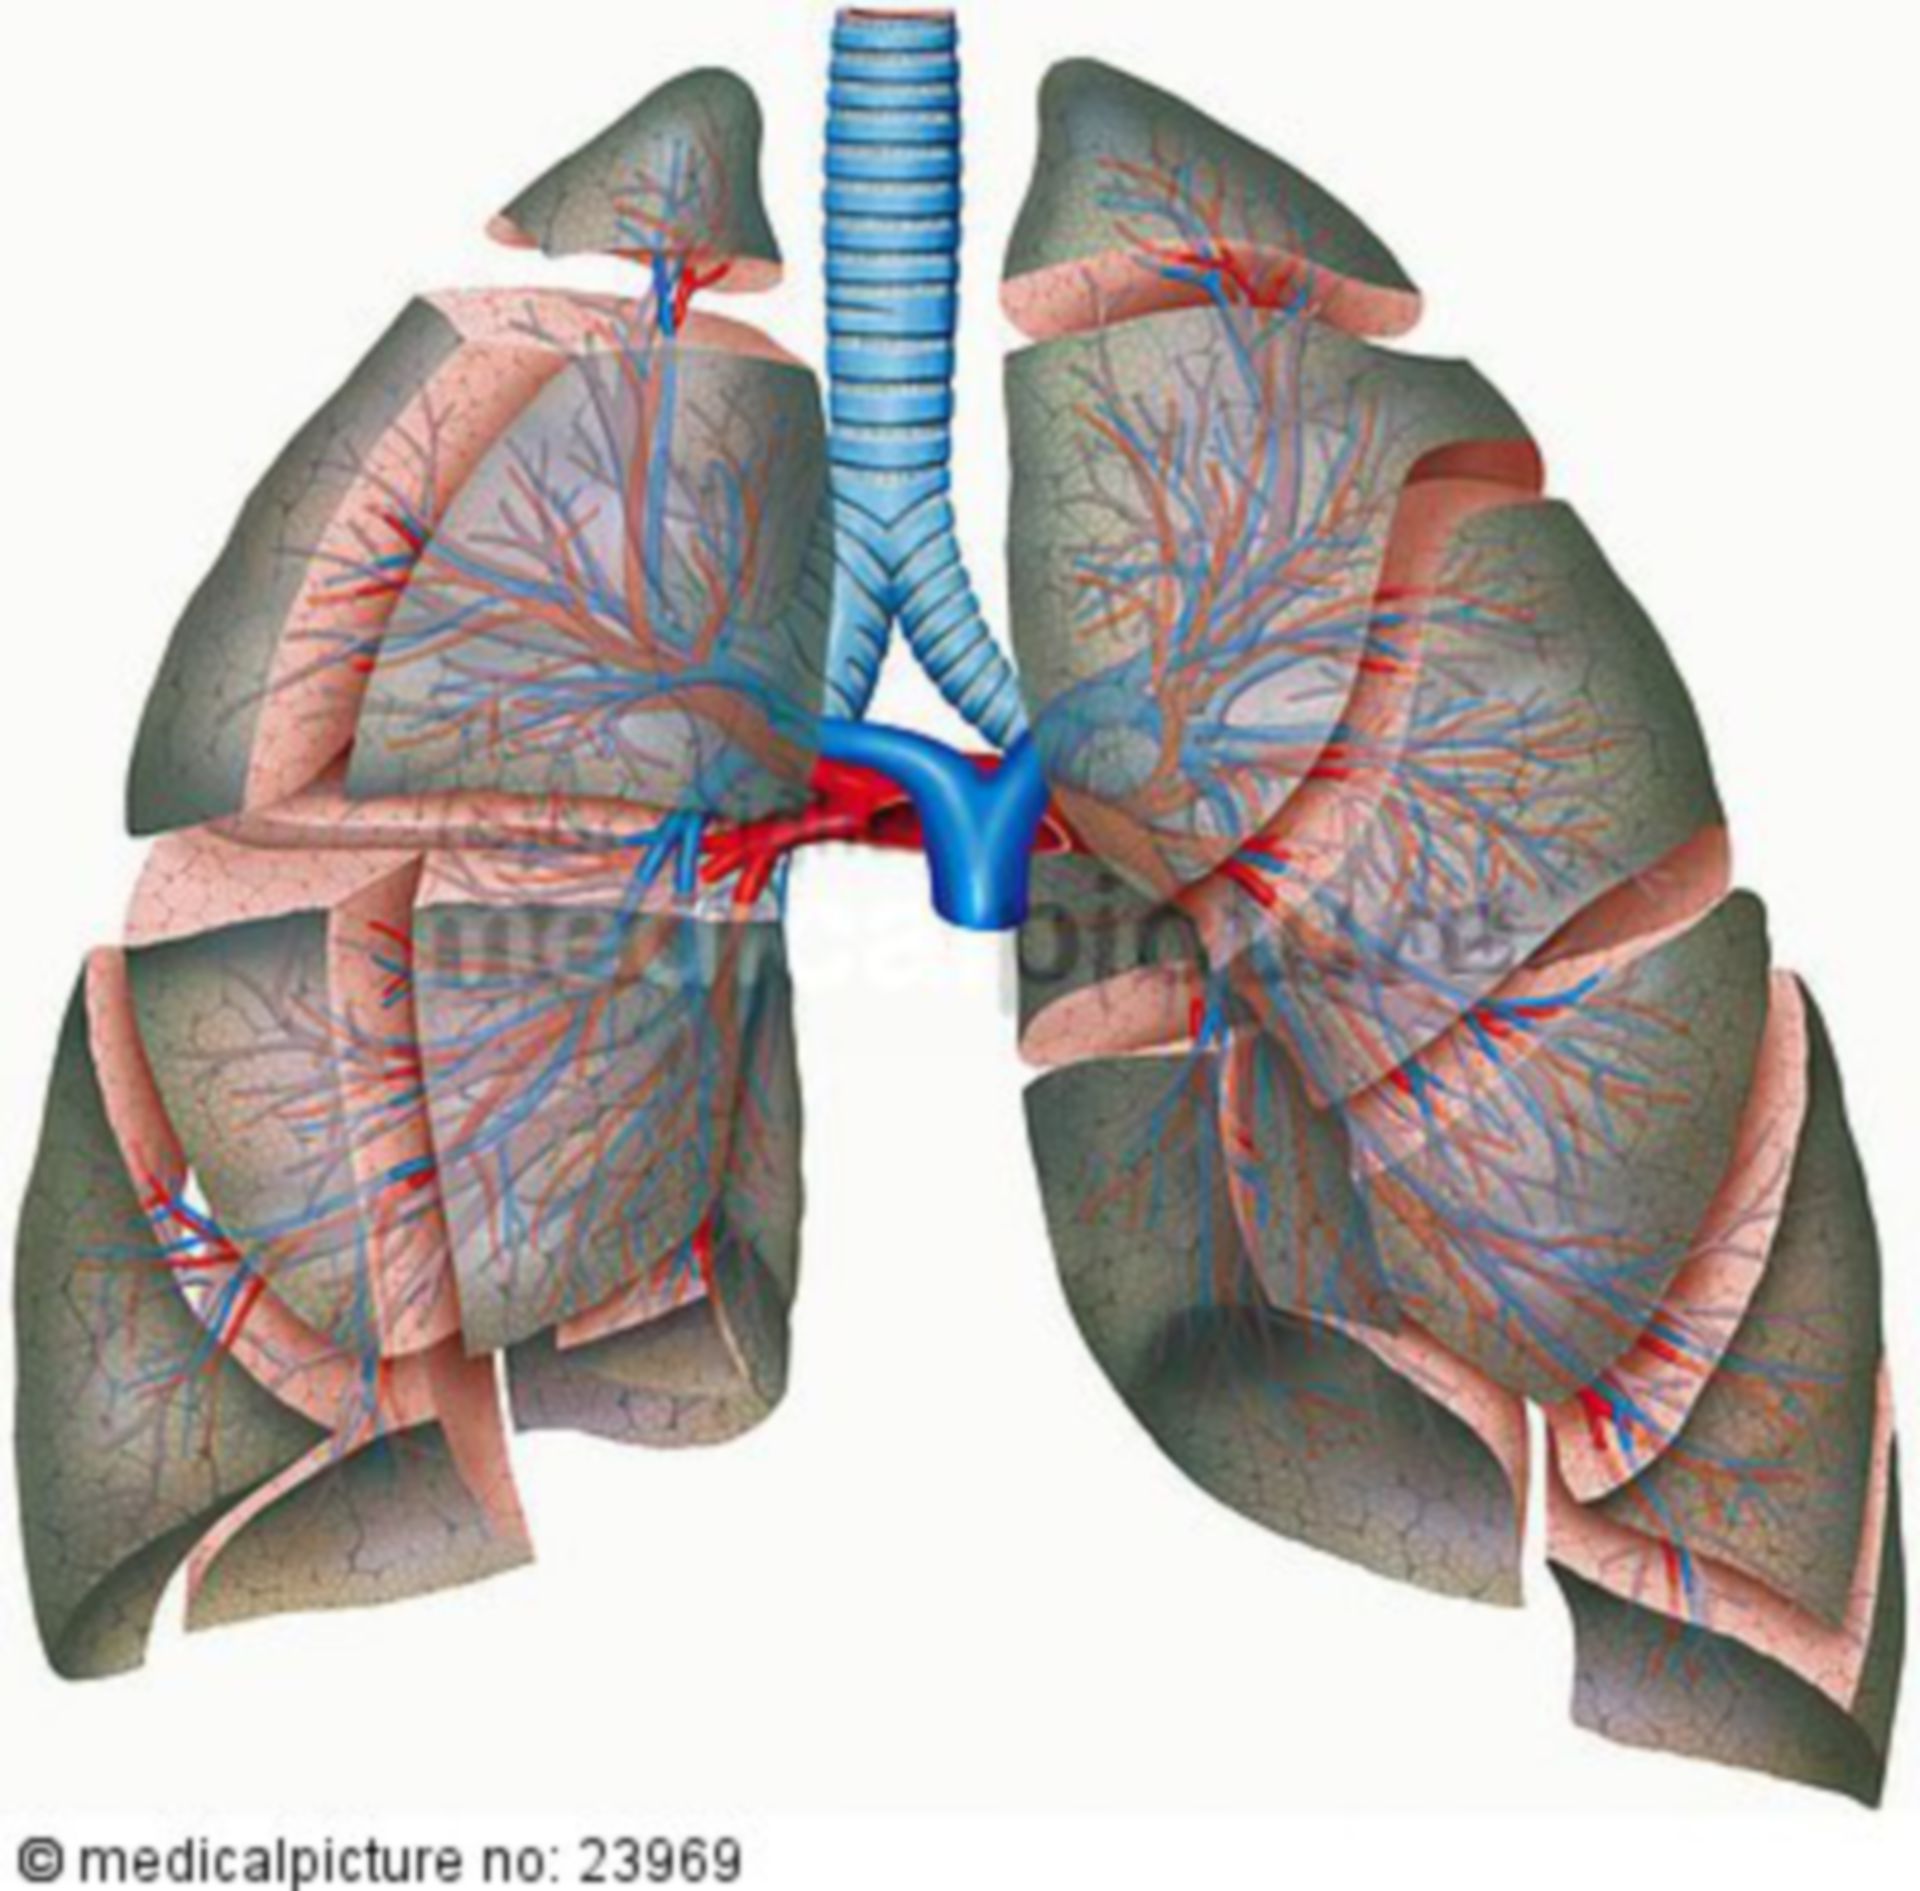 Lung segments